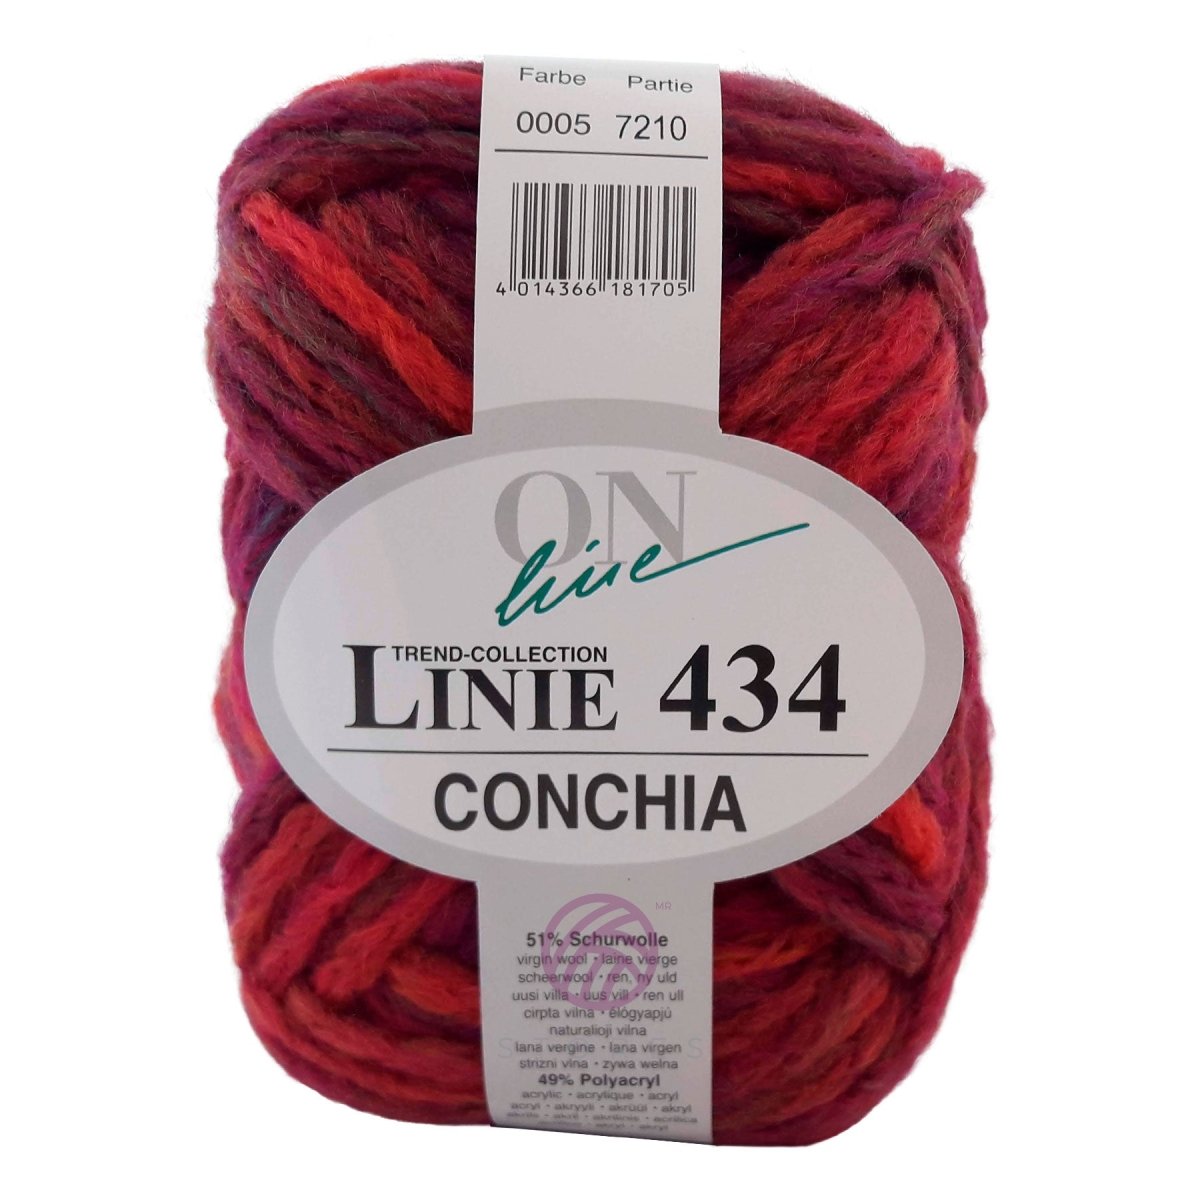 CONCHIA - Crochetstores110434-054014366181705